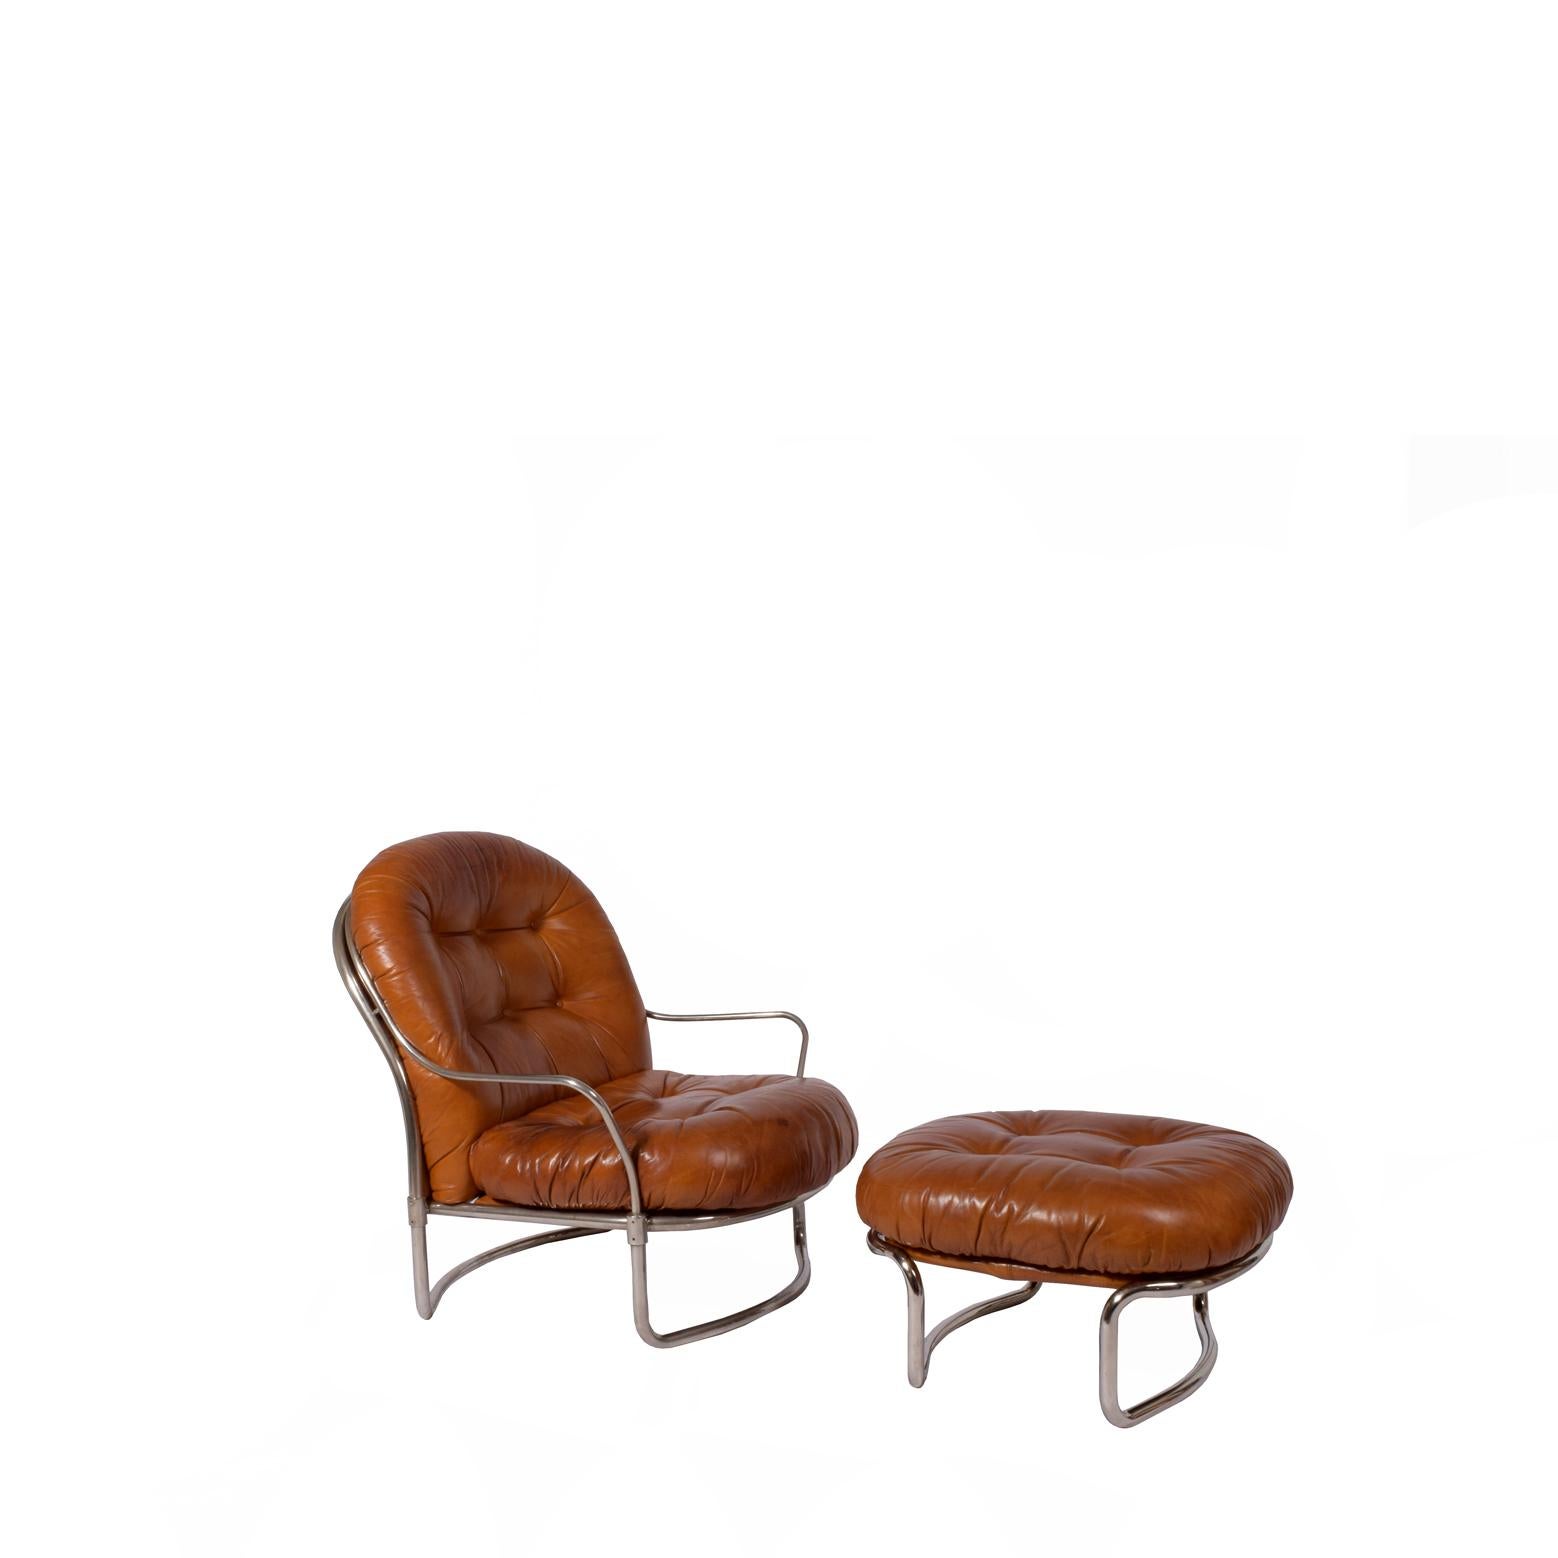 Carlo de Carli, lounge chair & ottoman no. 915 design for Cinova Italy original cognac leather, nickel plated steel frame.